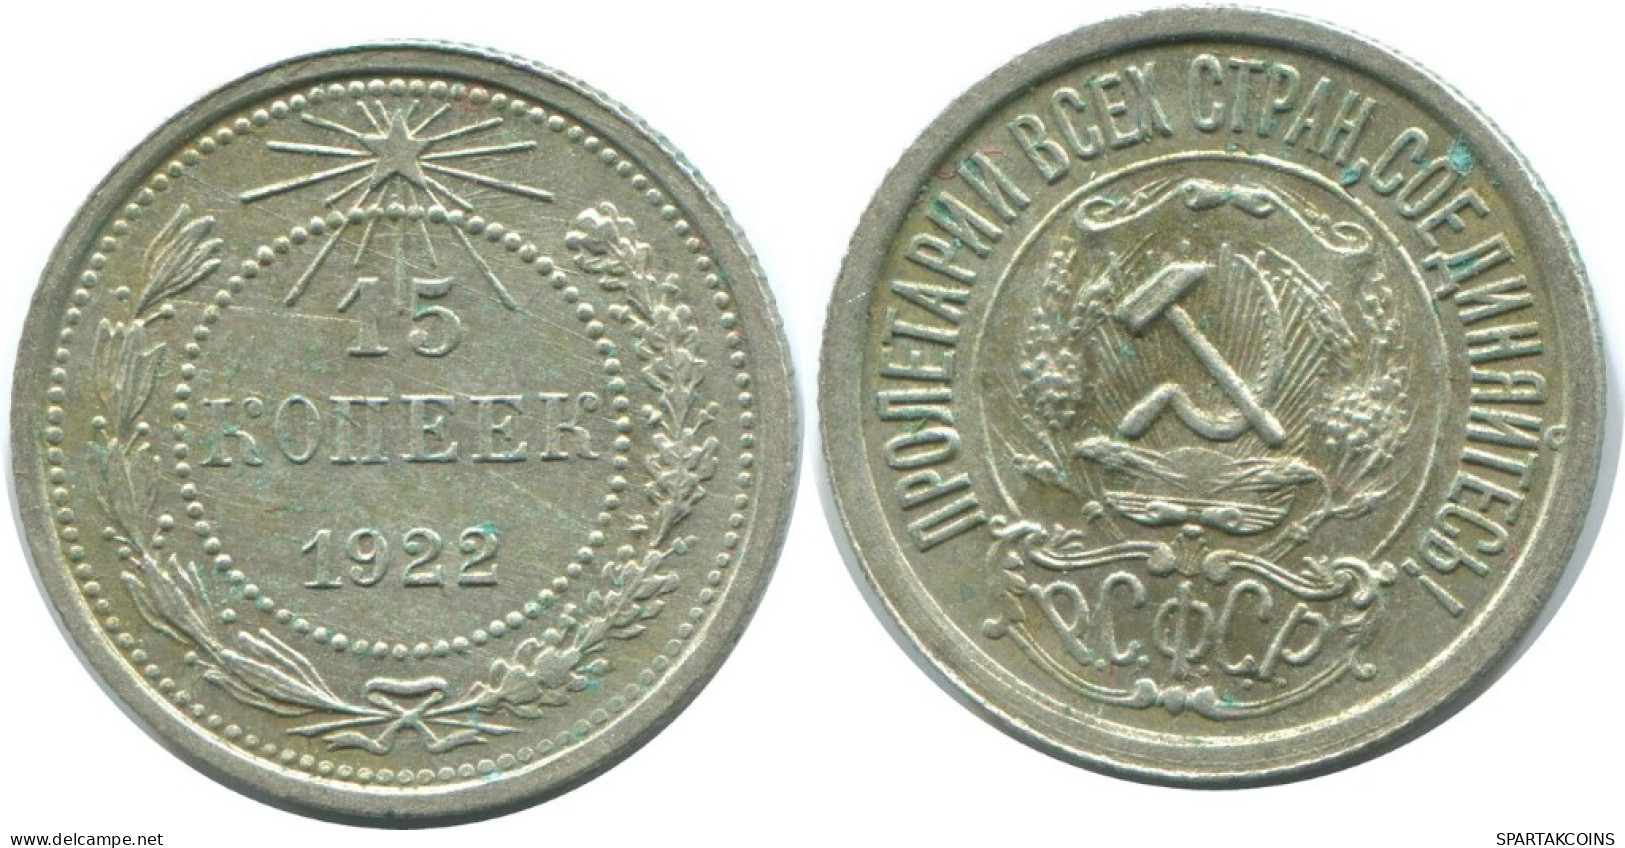 15 KOPEKS 1922 RUSSIA RSFSR SILVER Coin HIGH GRADE #AF250.4.U.A - Russia